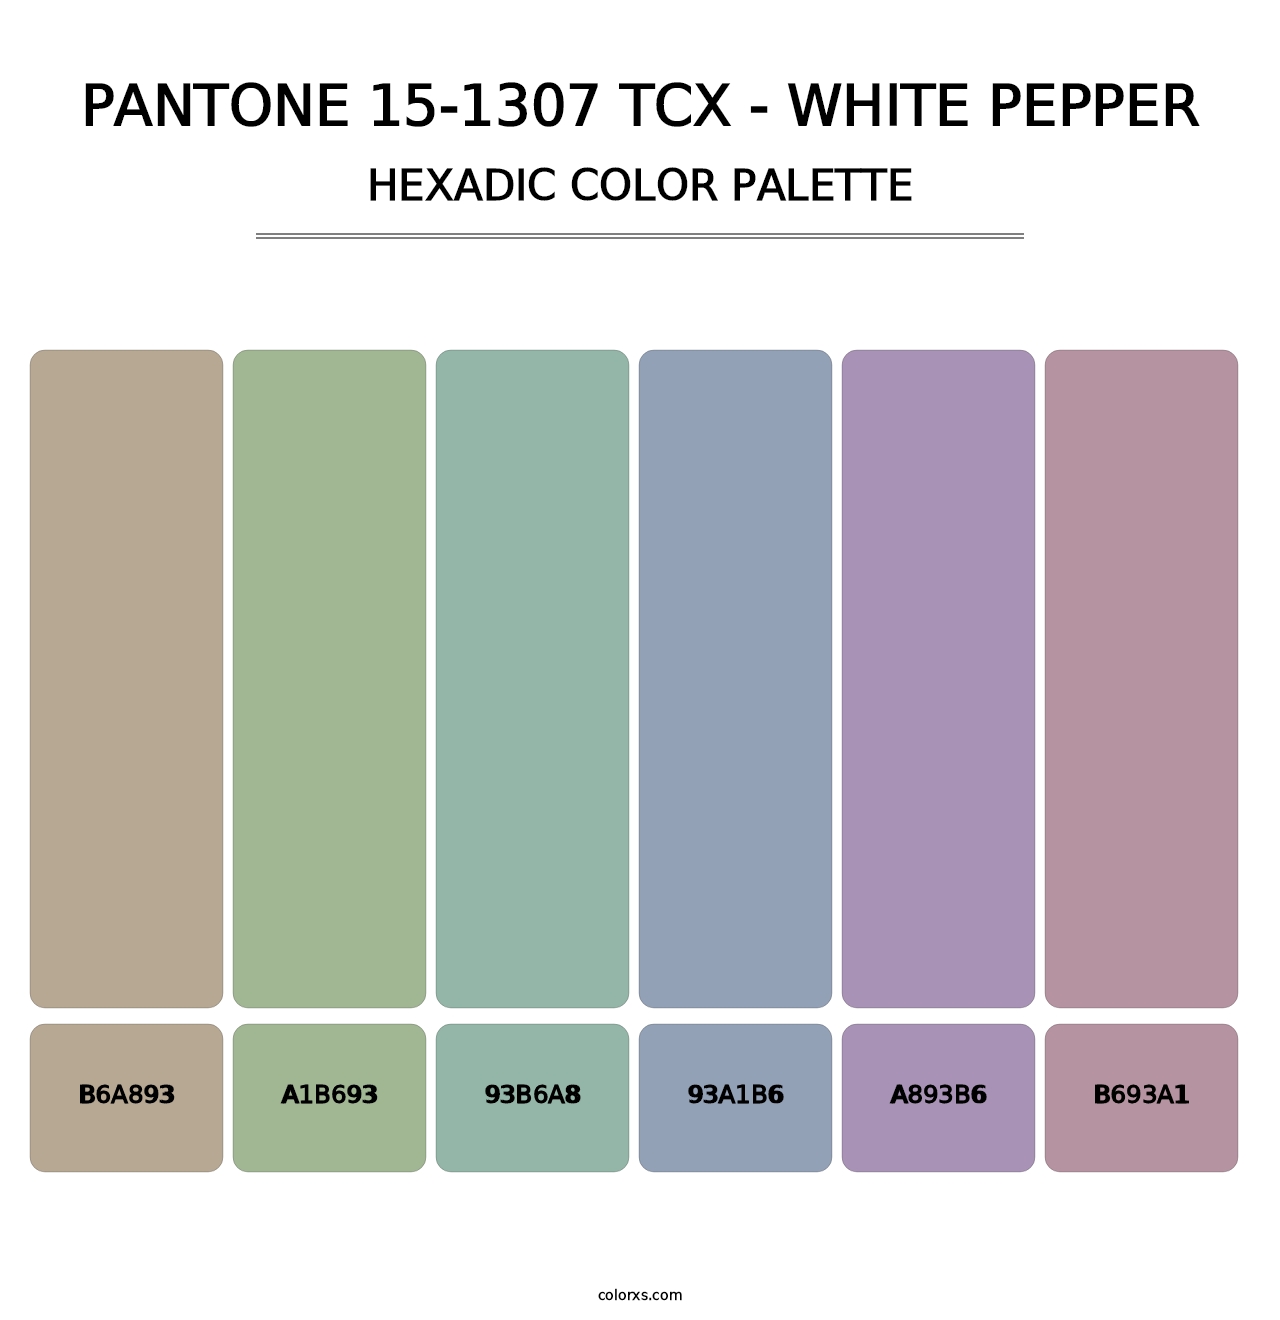 PANTONE 15-1307 TCX - White Pepper - Hexadic Color Palette